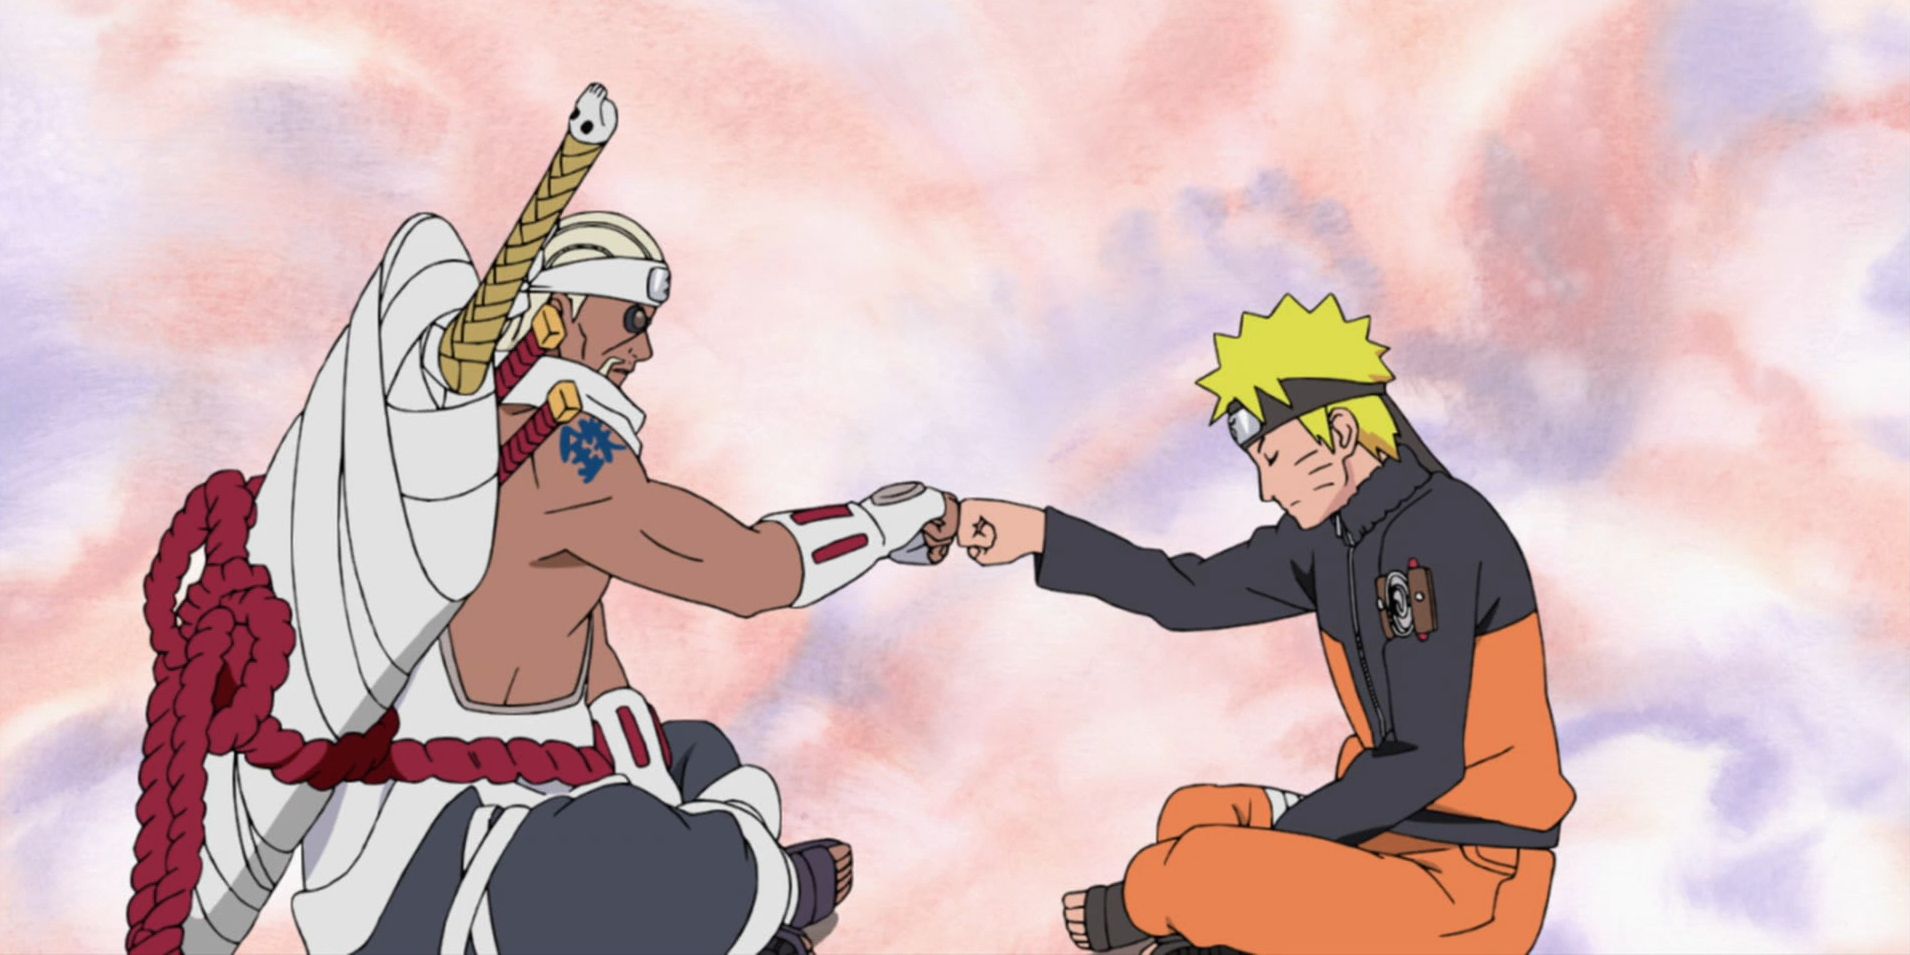 Naruto and Killer Bee fist bump in Naruto.